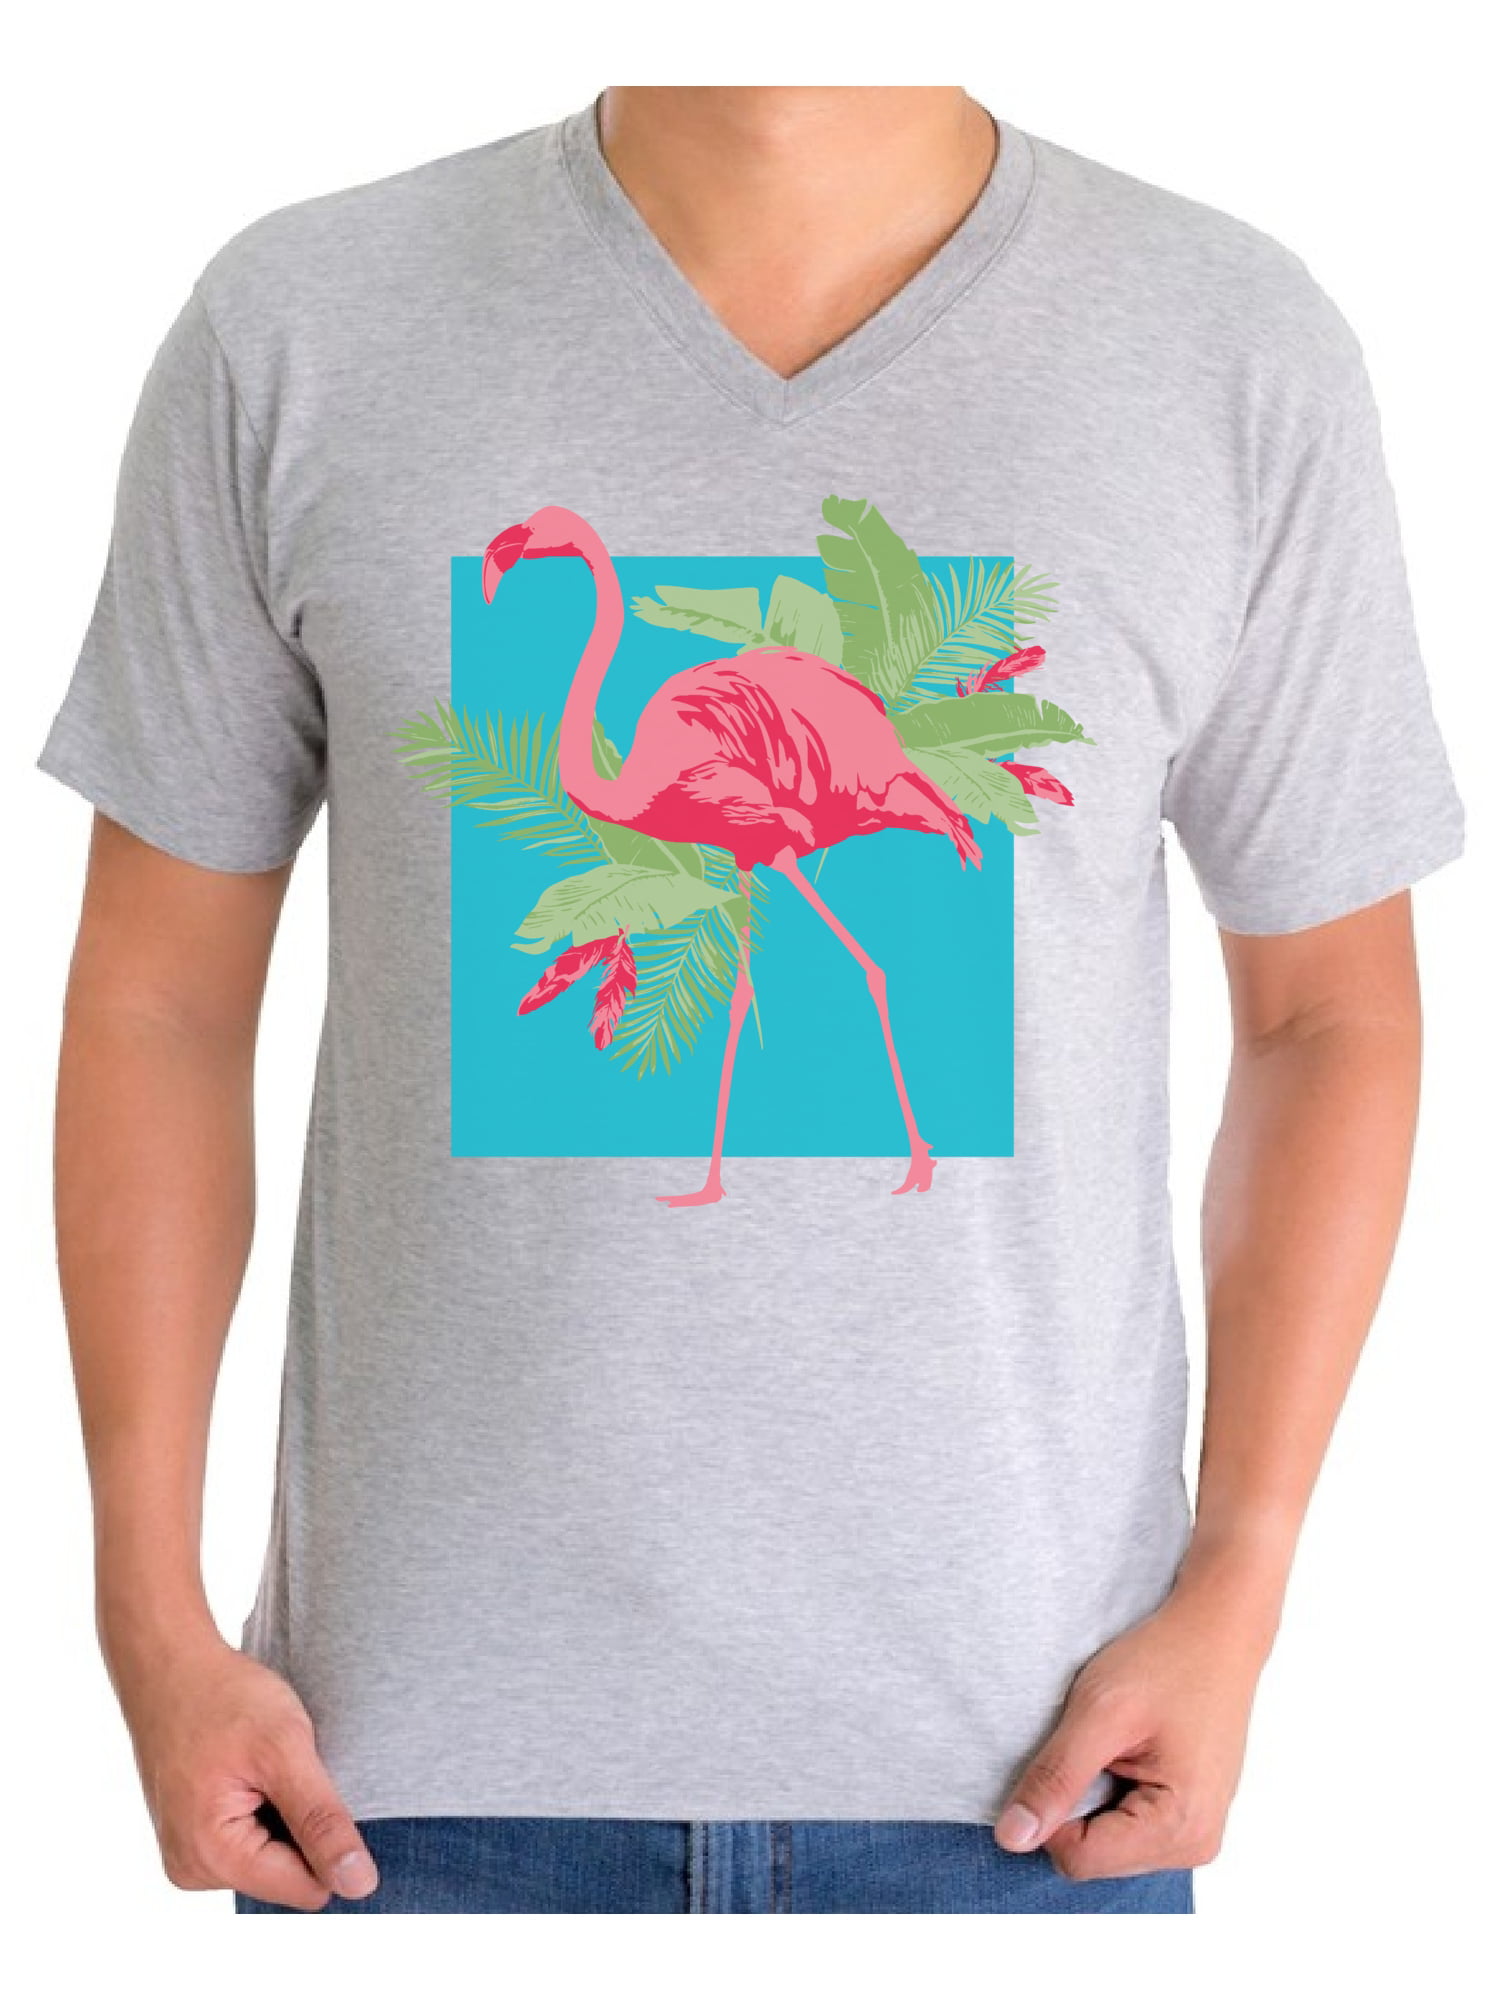 Awkward Styles Pink Flamingo Shirts Flamingo V Neck Shirt for Men Pink ...